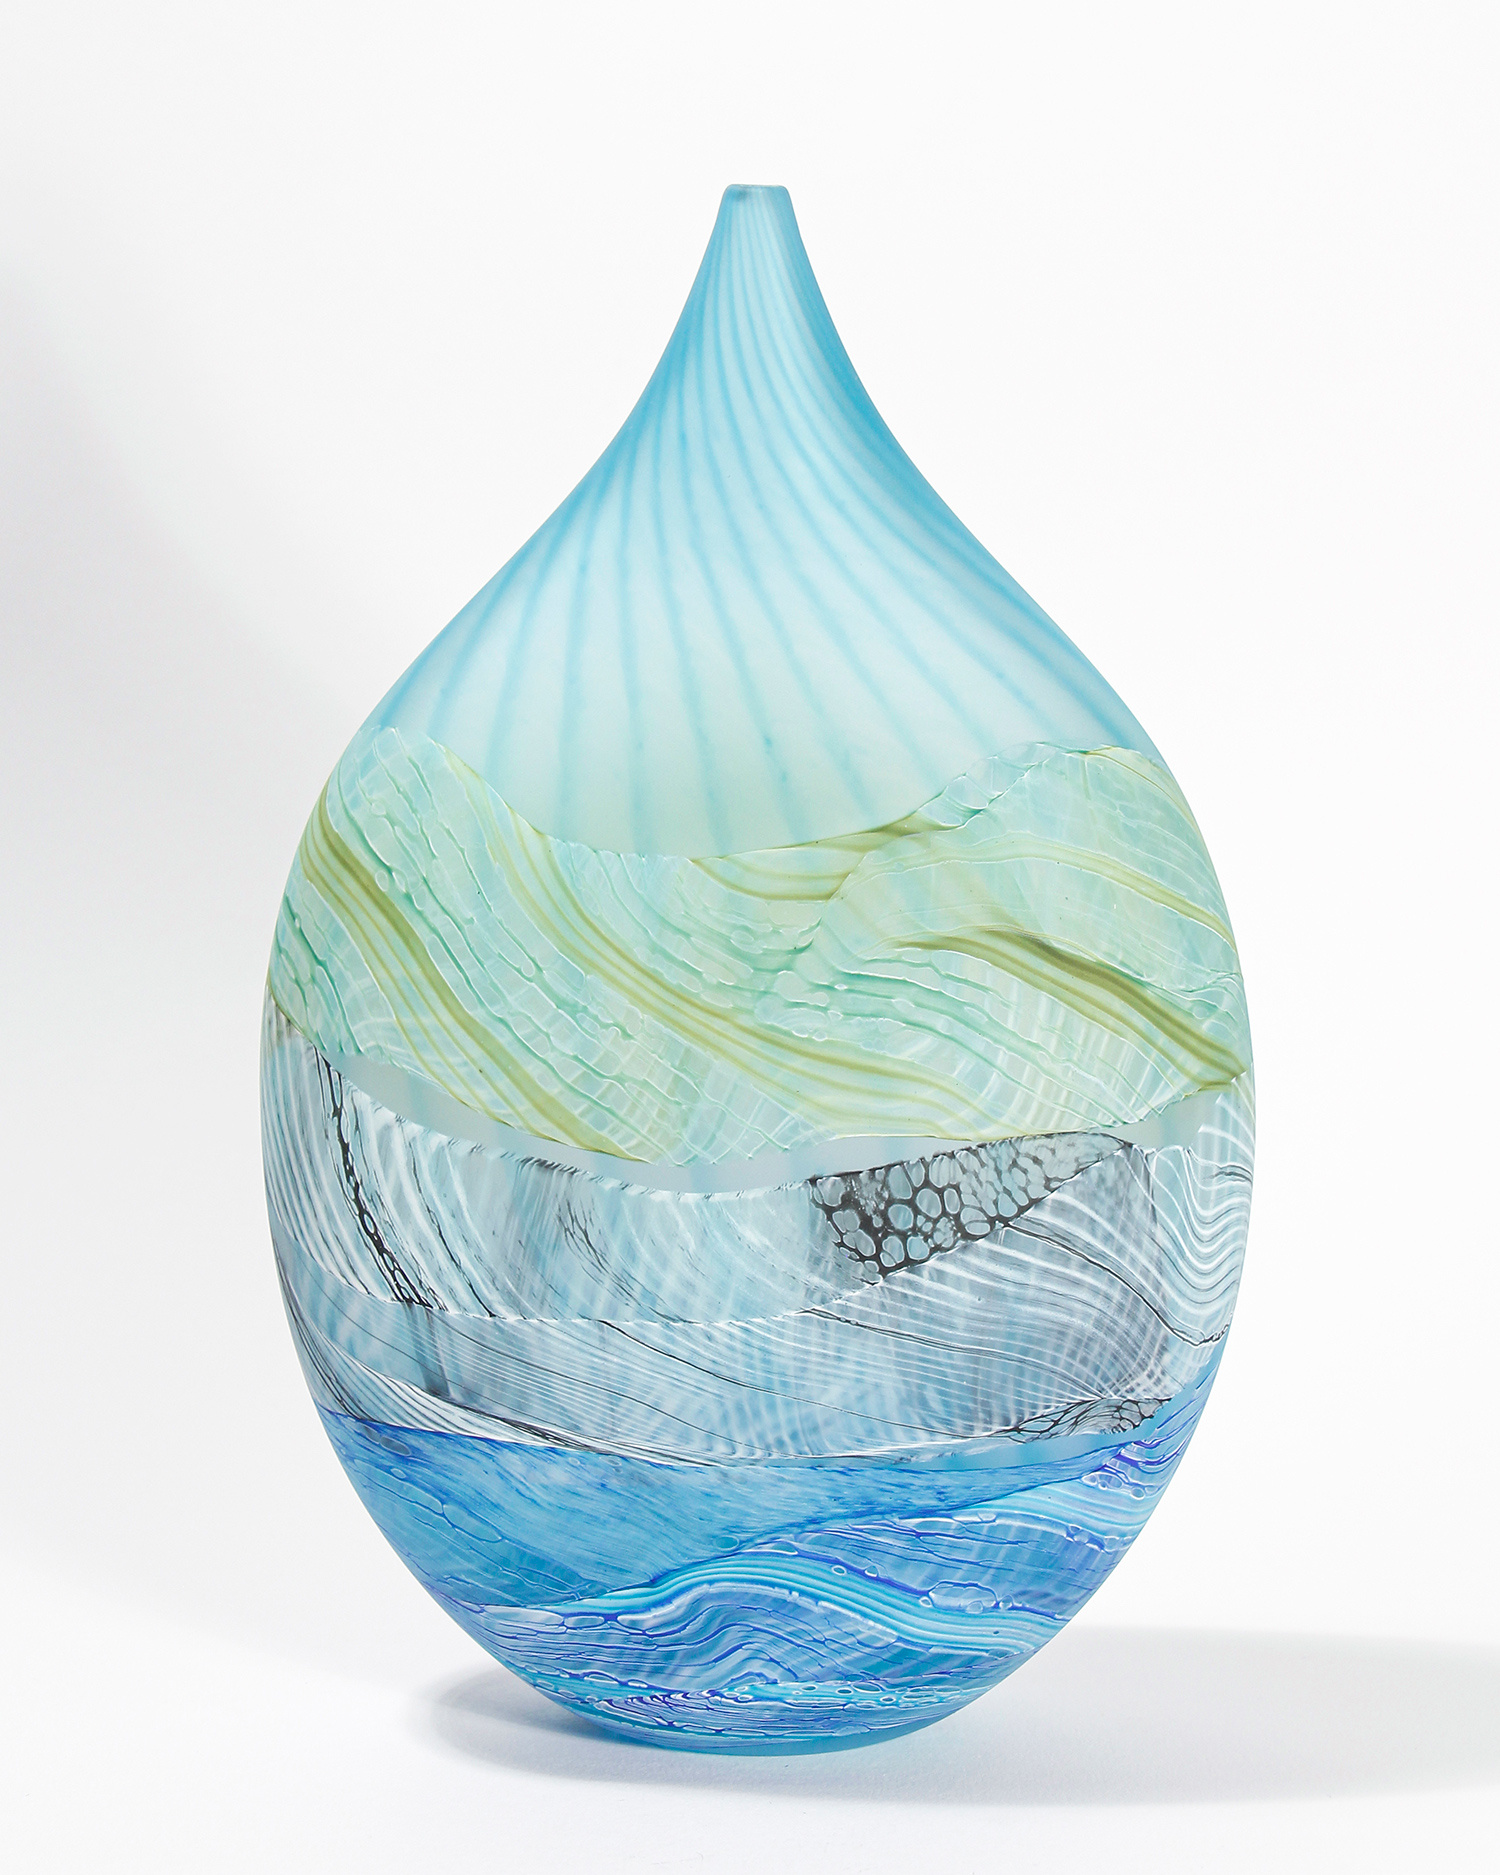 Spring Tides Teardrop Vase, medium by Thomas Petit